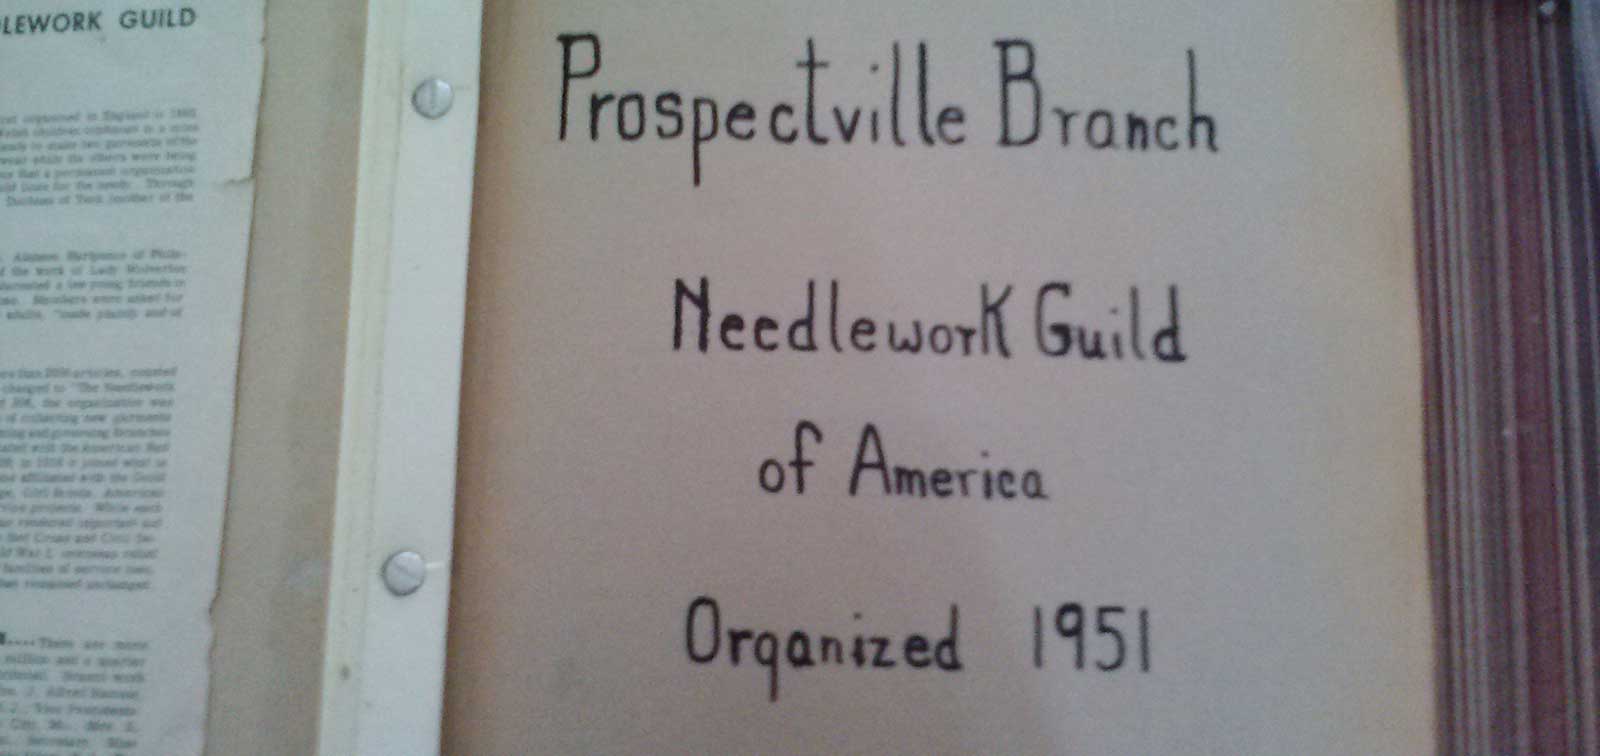 photo handbook from Prospectville Branch Needlework Guild of America